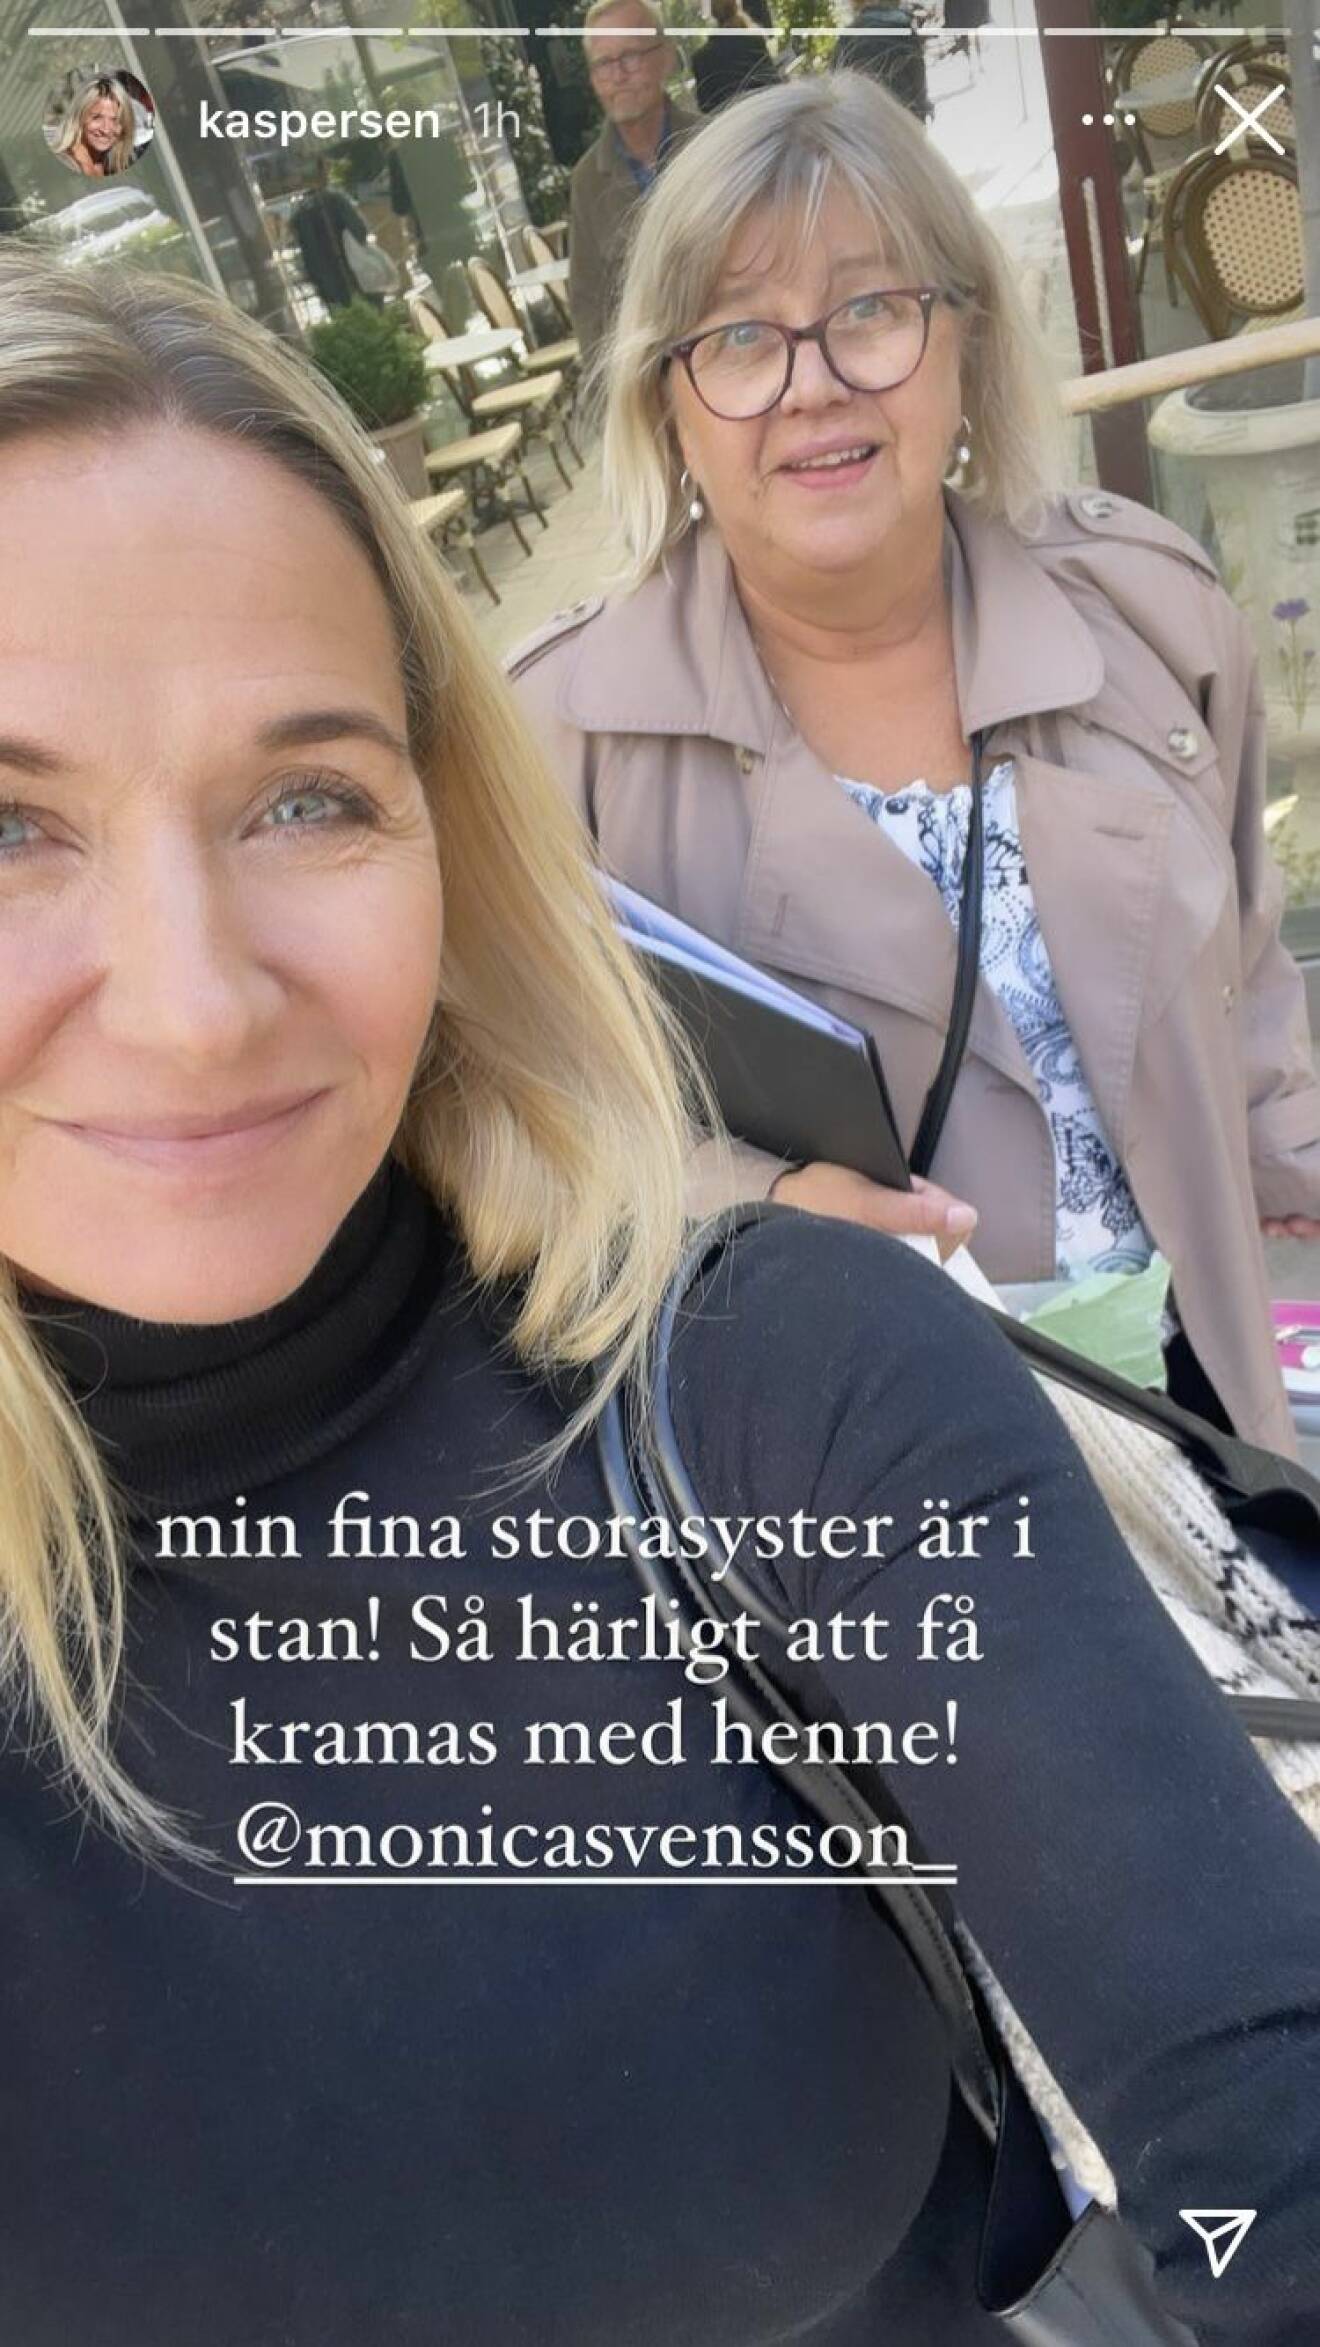 Kristin Kaspersen med sin Storasyster Monica Svensson